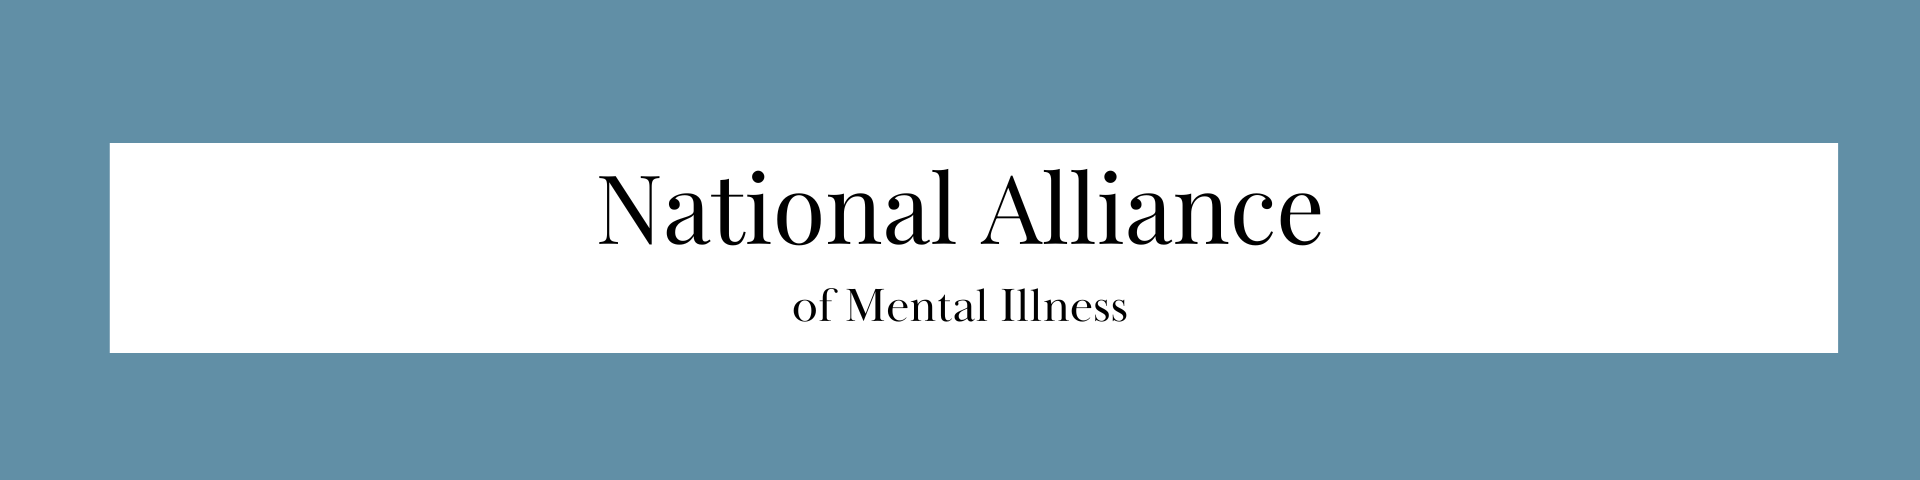 National Alliance of Mental Illness (Link)